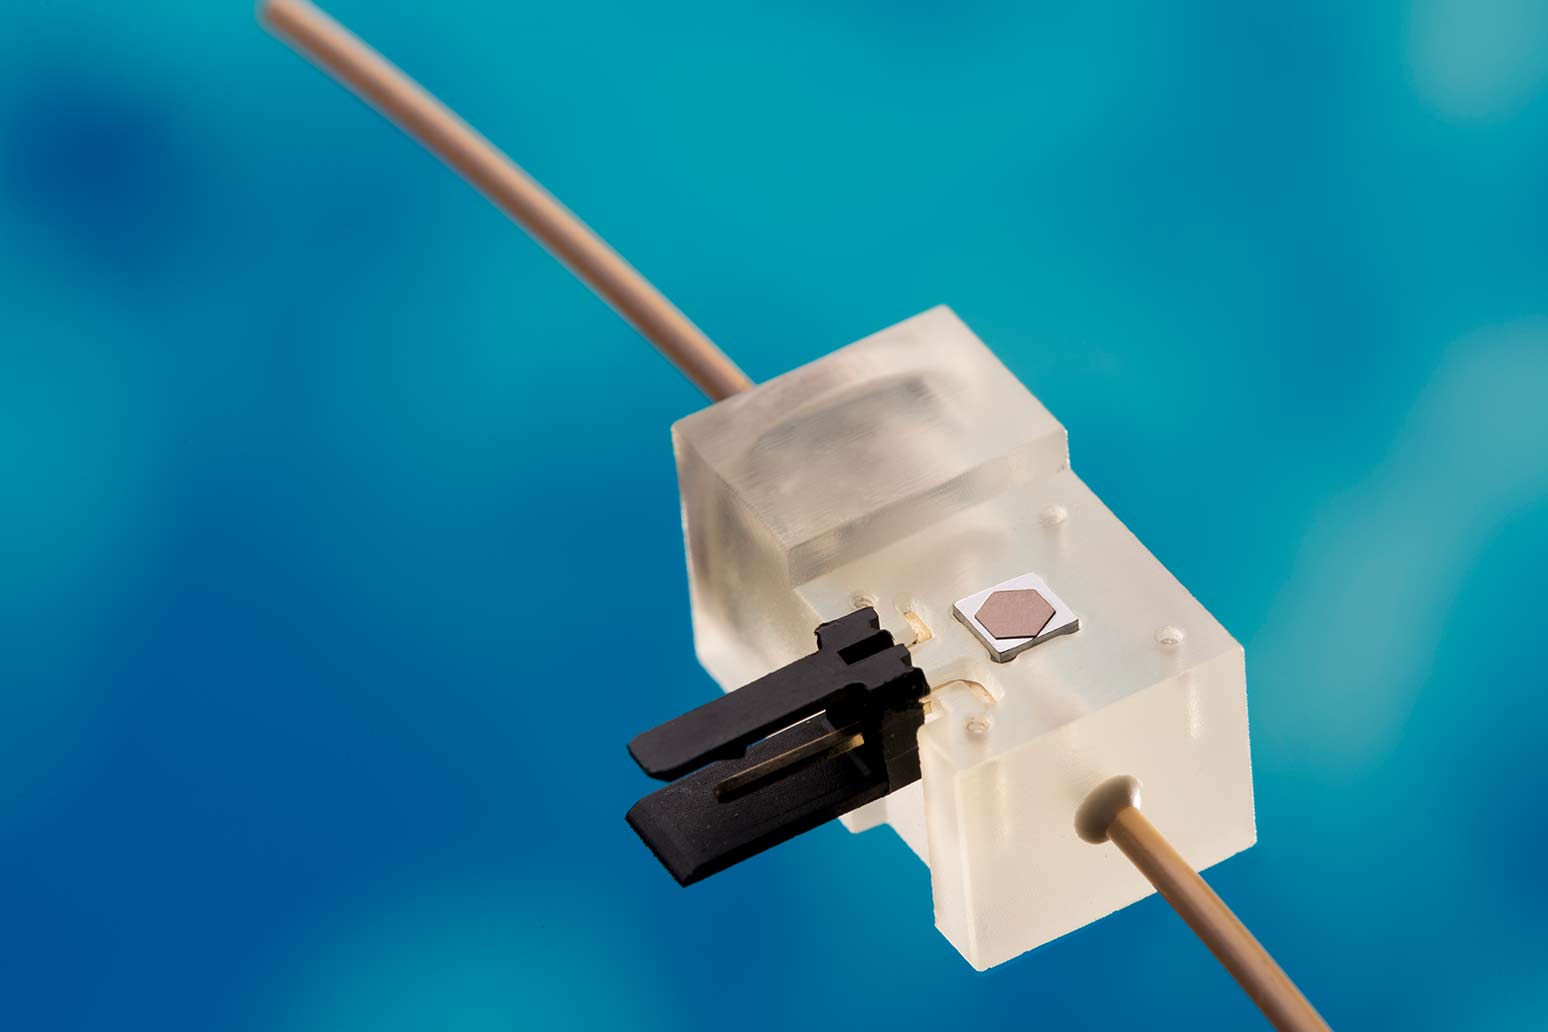 Silicon micropump for smart catheter